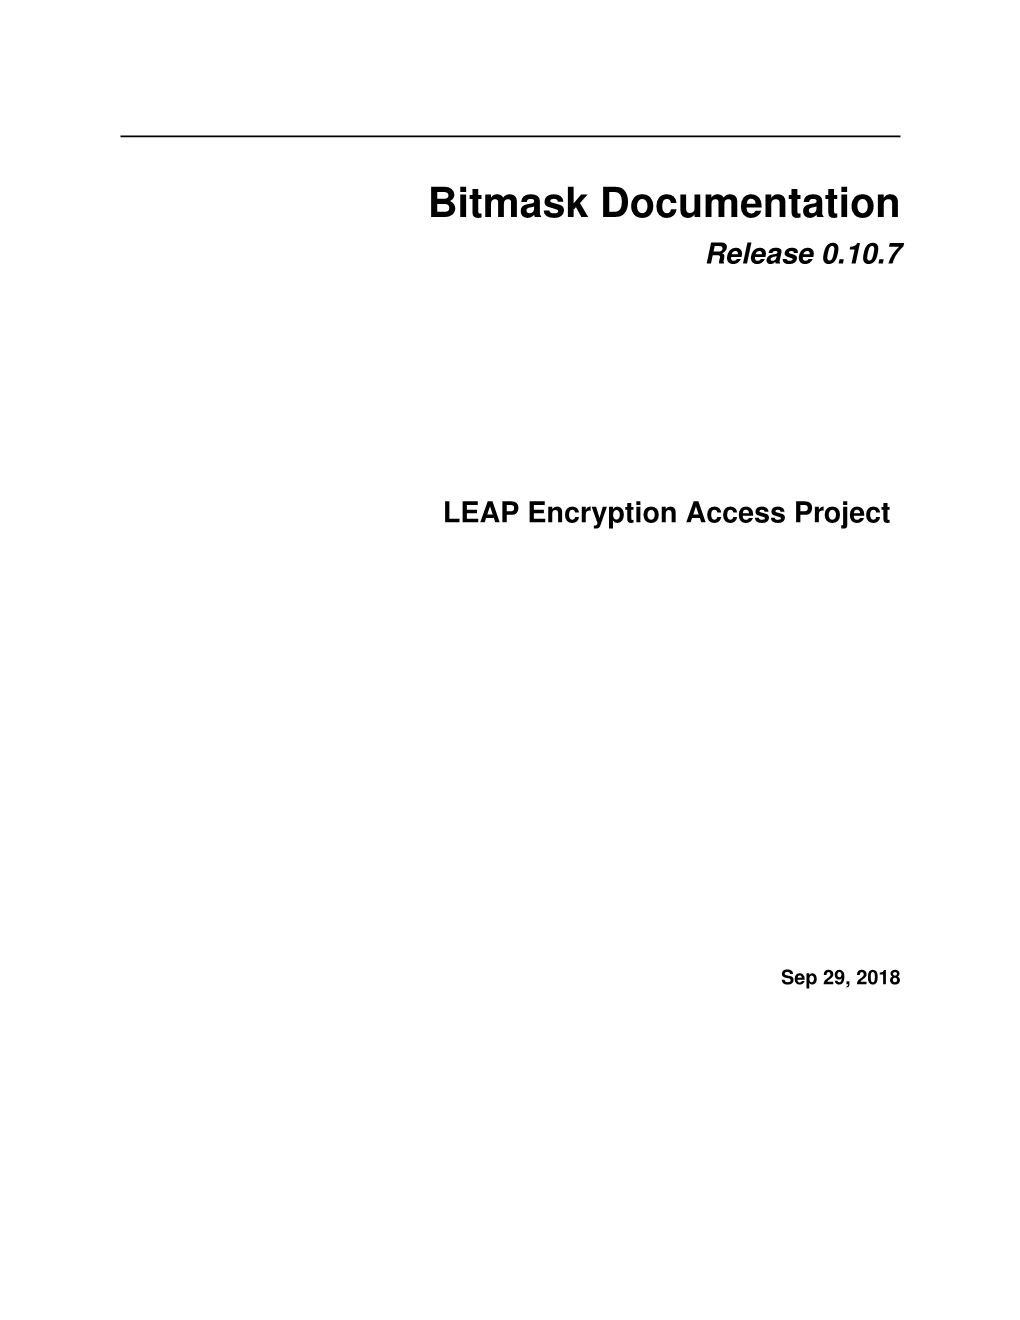 Bitmask Documentation Release 0.10.7